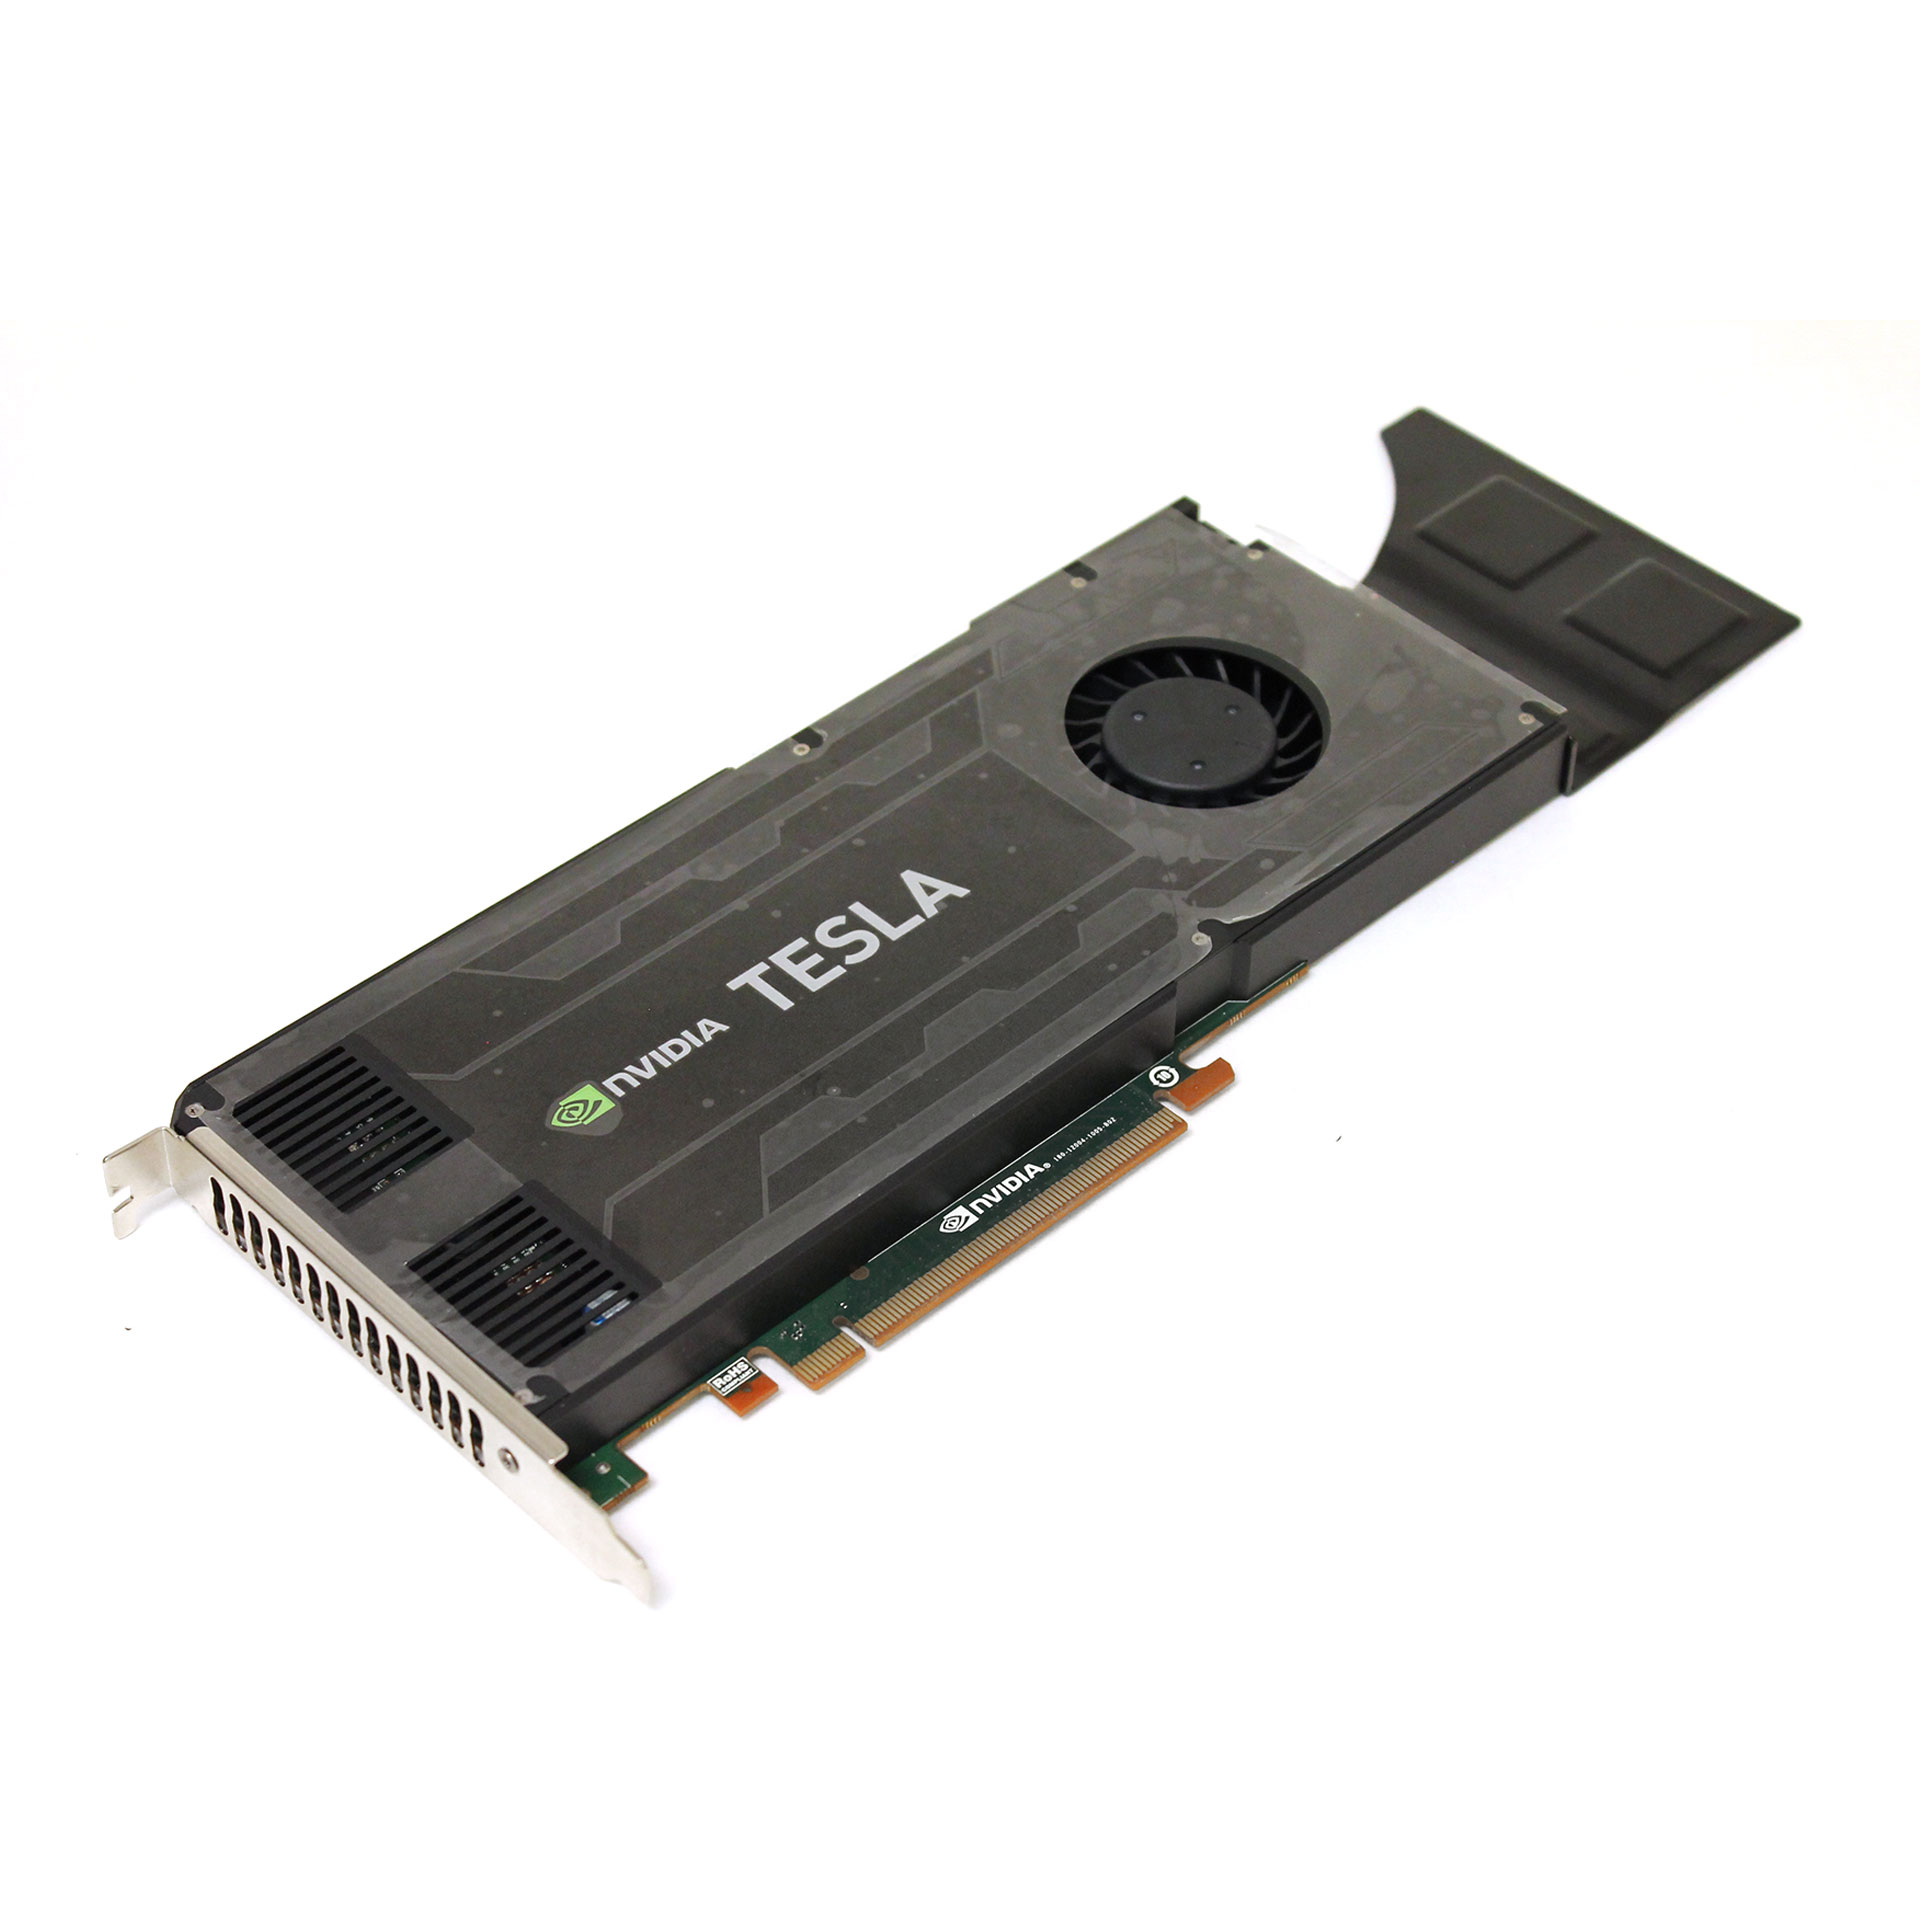 Nvidia TESLA K8 GPU Active Accelerator 900-22004-0000-000 - Click Image to Close